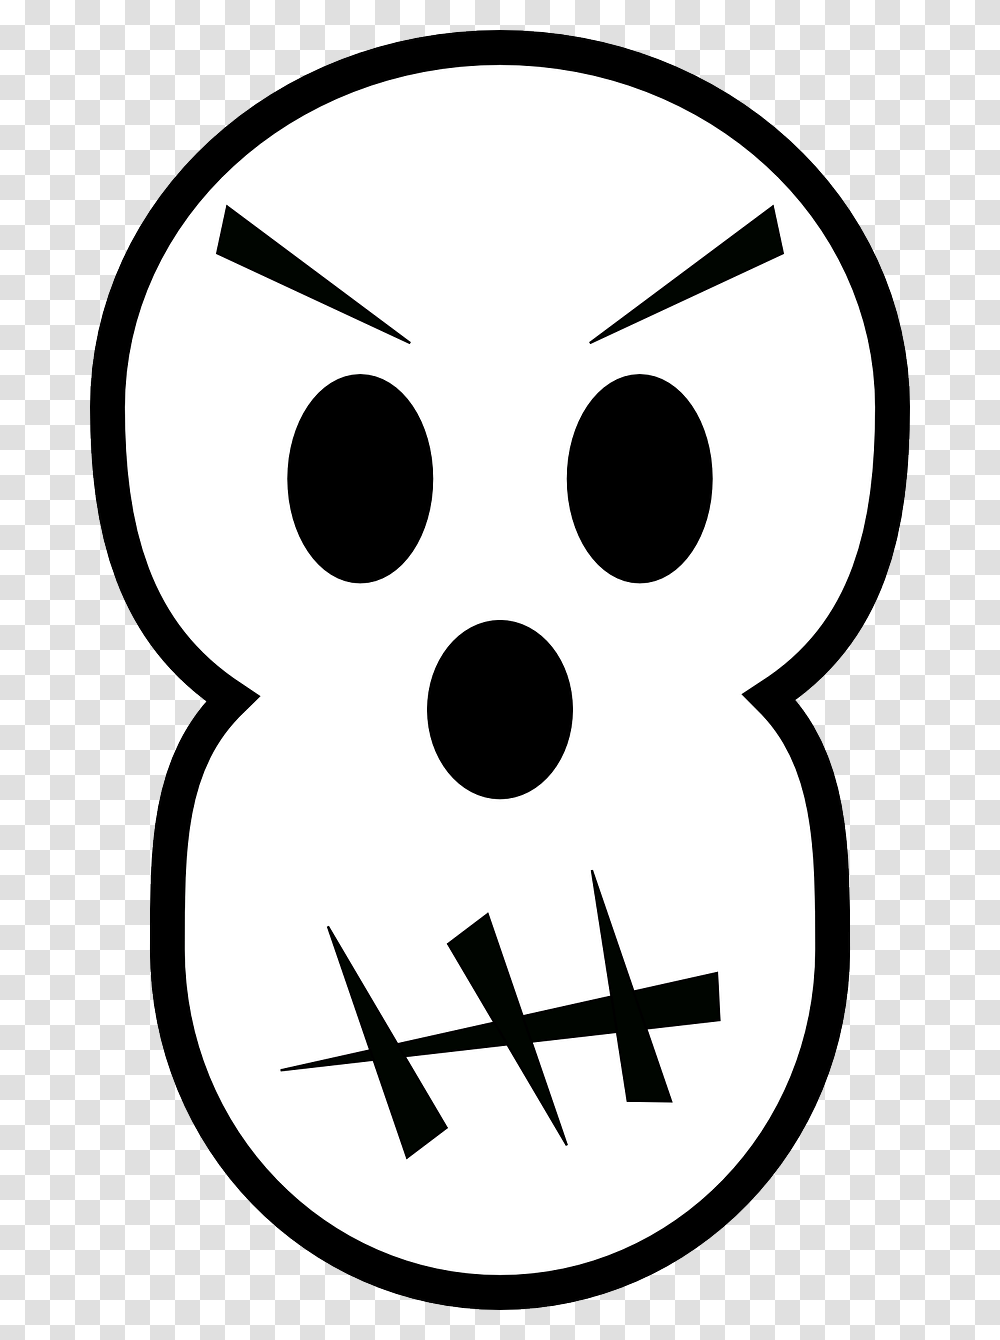 Skull And Crossbones Clipart Vector Clip Art Online Black And White Halloween Clip Art, Stencil, Emblem, Weapon Transparent Png